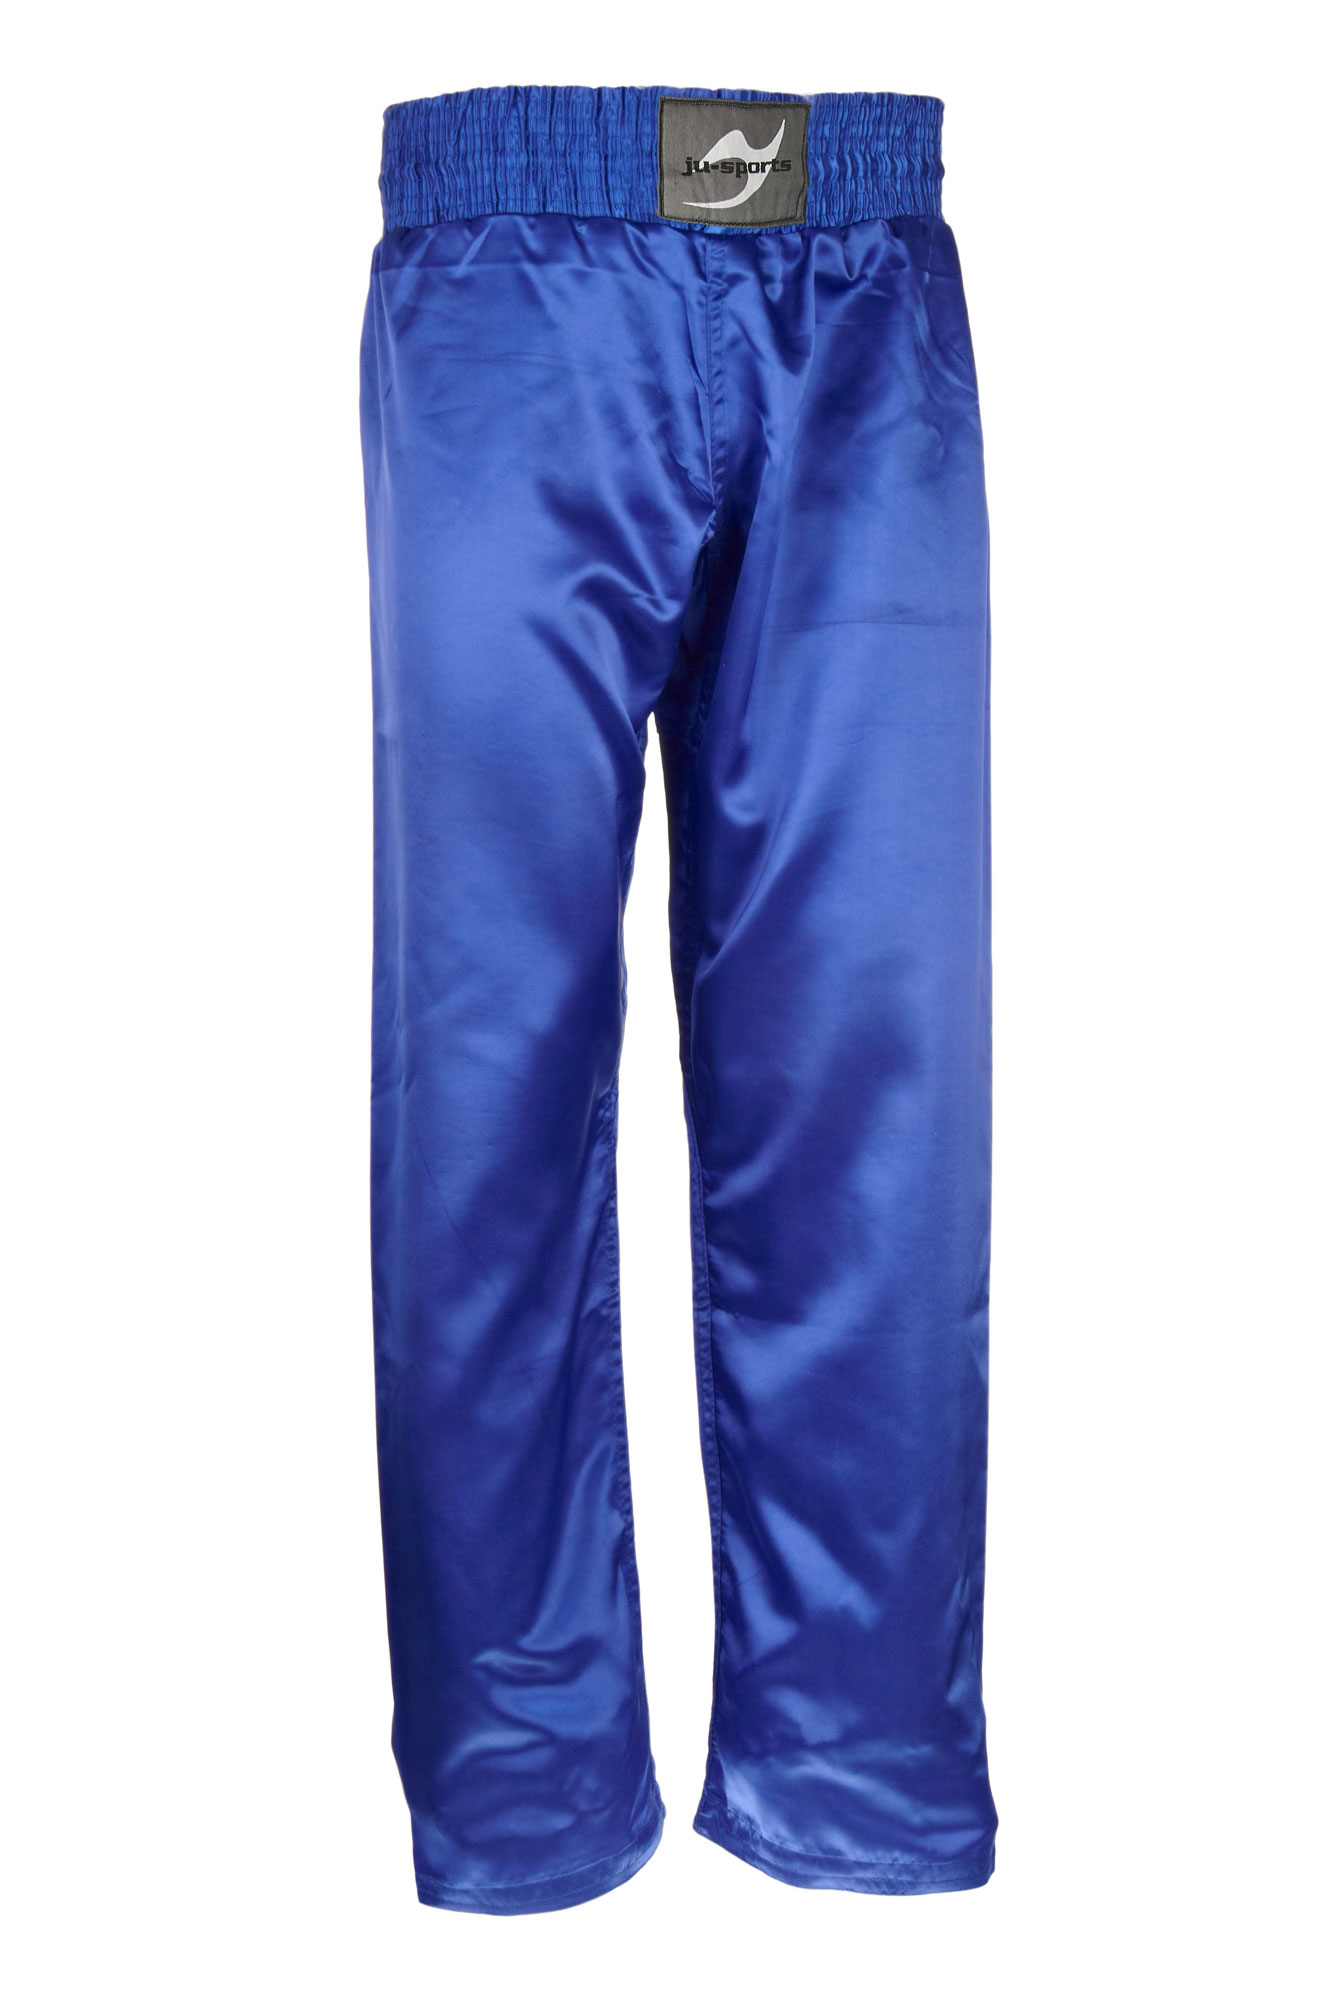 Ju-Sports Kick Boxing Pants Solid Blue